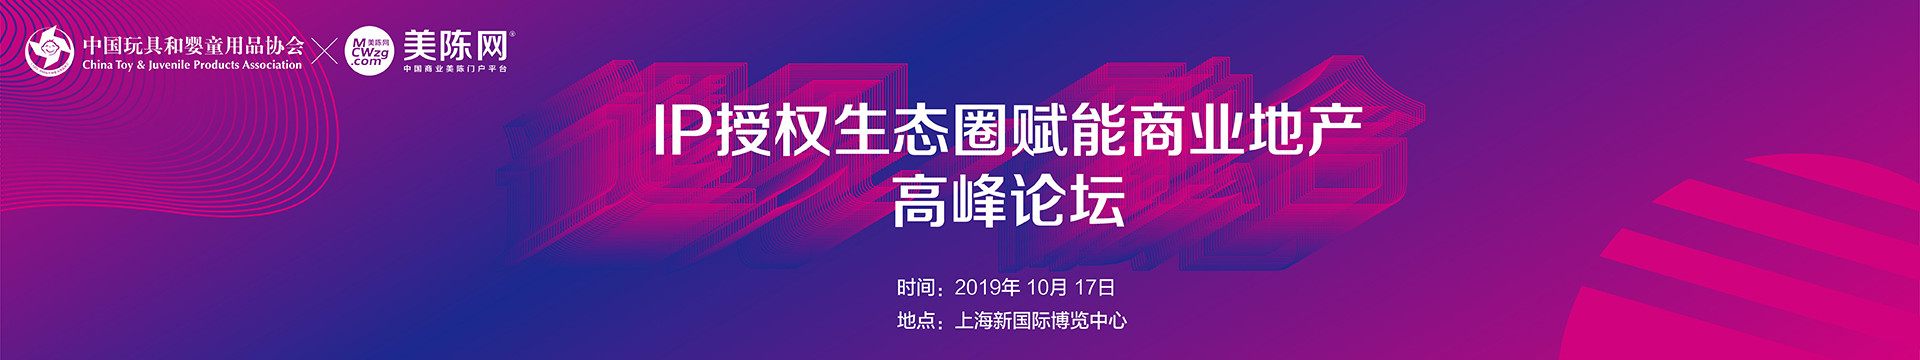 2019IP生态圈赋能商业地产高峰论坛（上海）